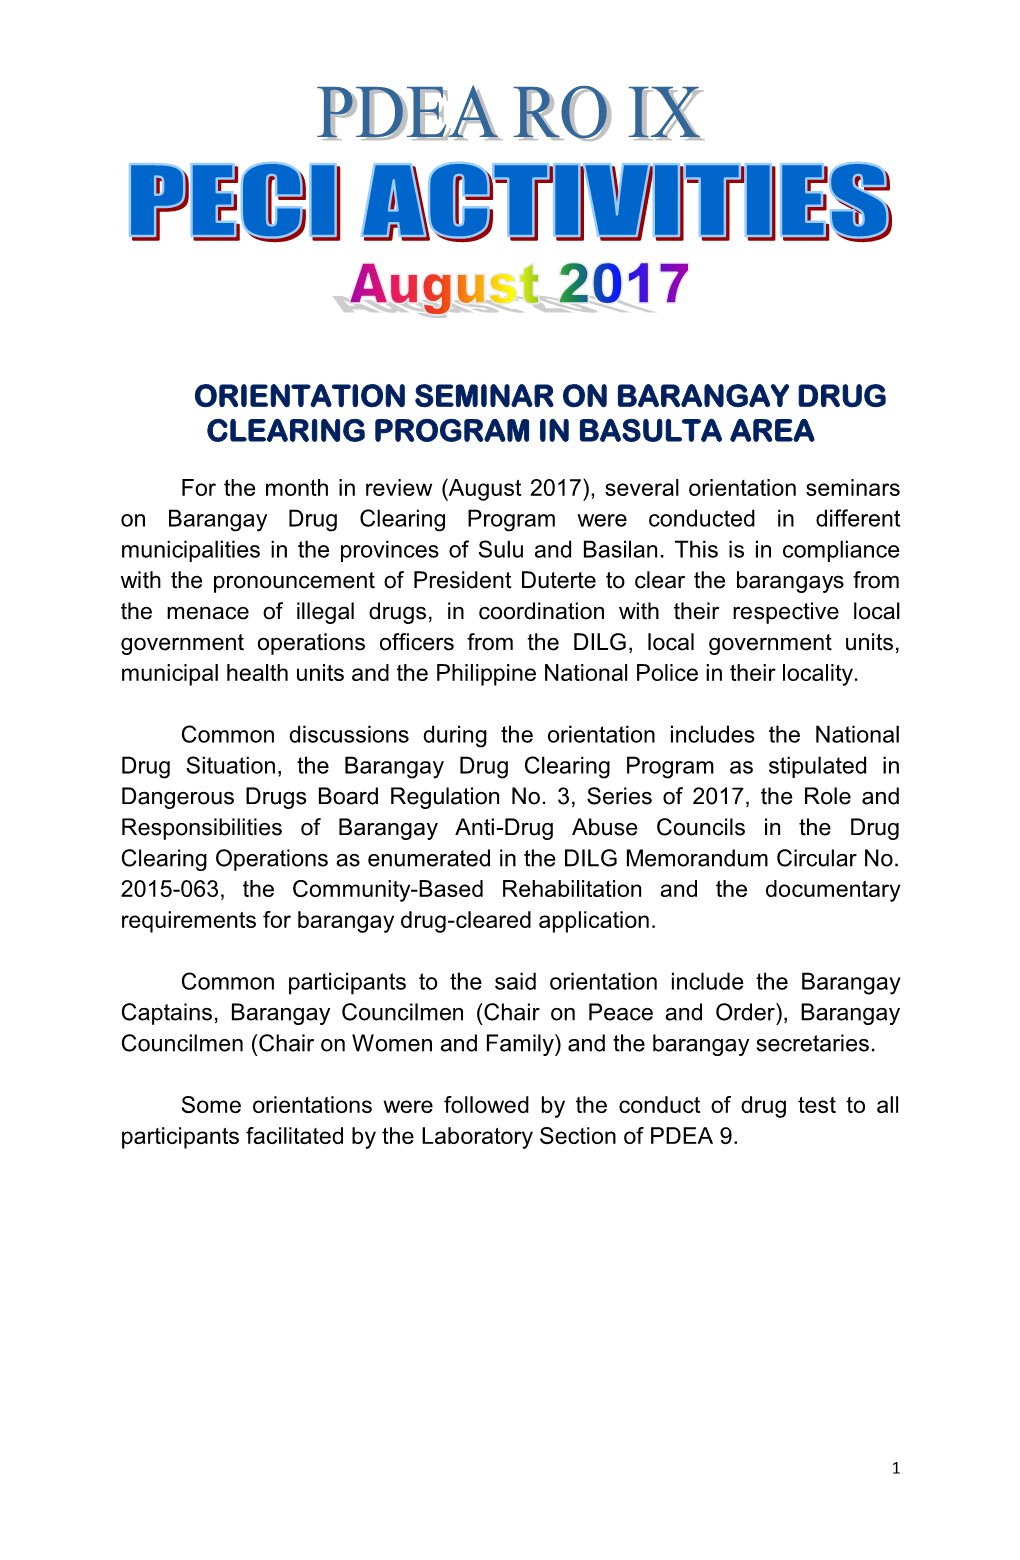 Orientation Seminar on Barangay Drug Clearing Program in Basulta Area